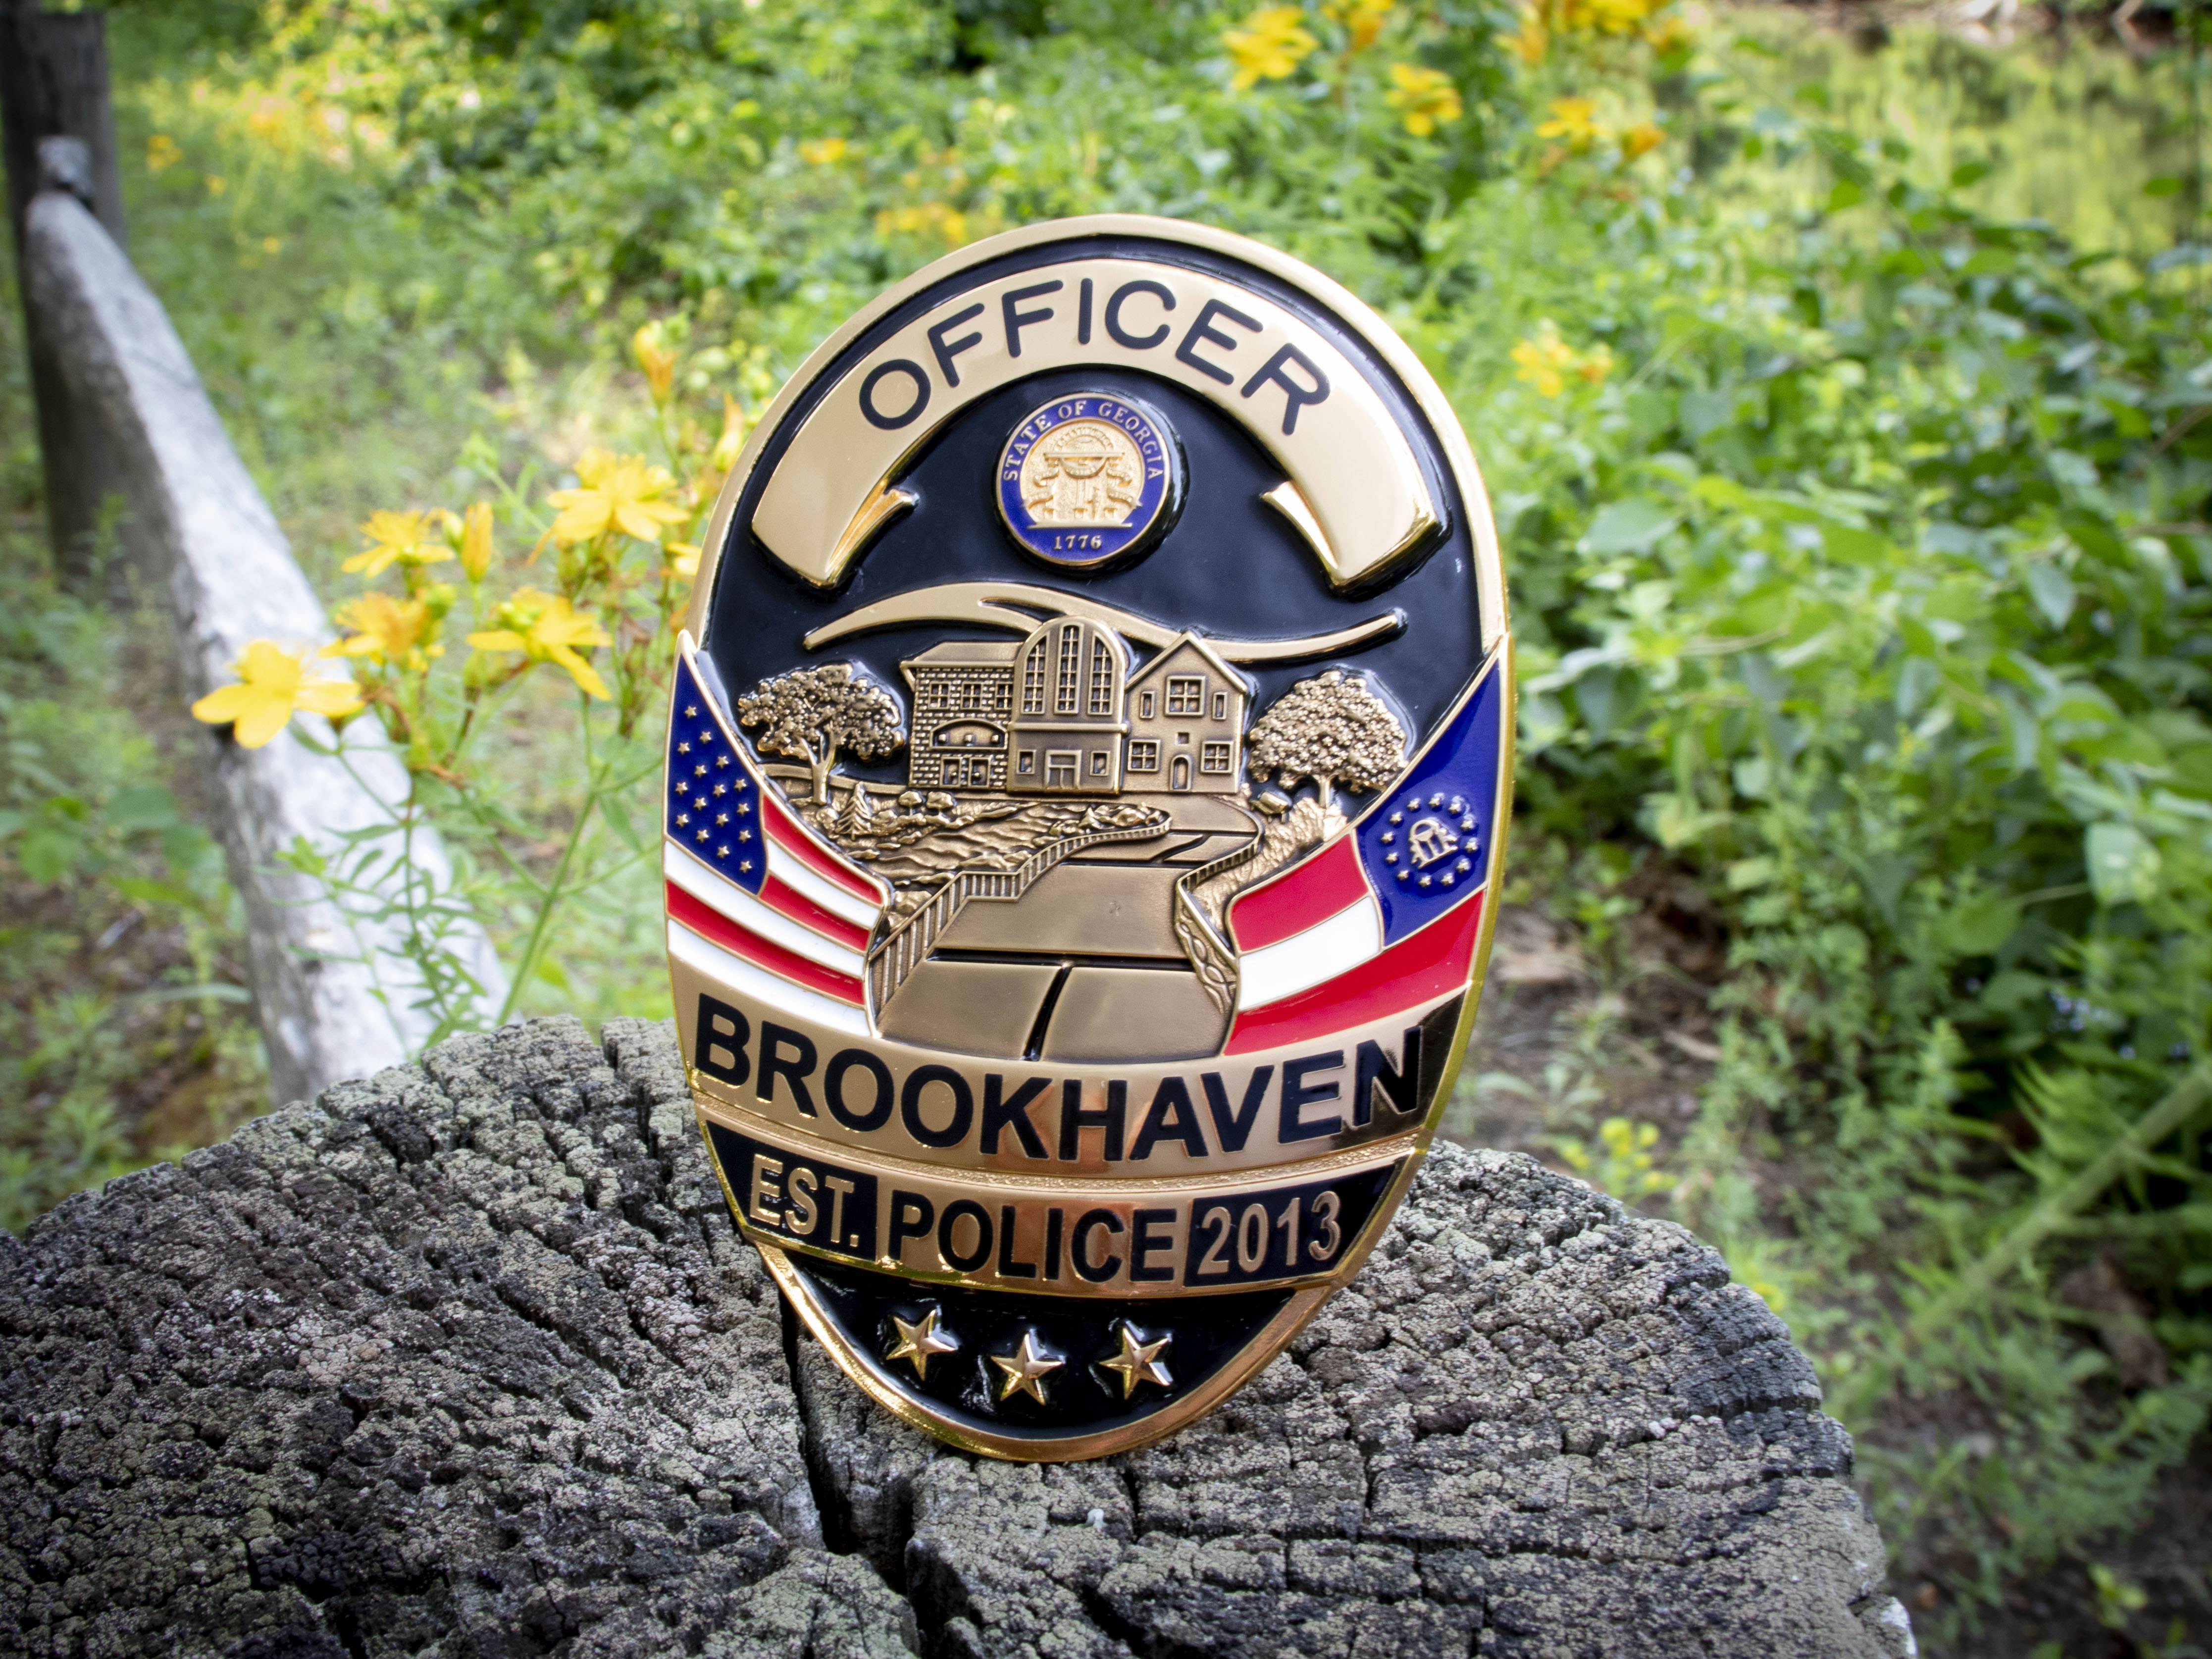 Brookhaven police badge badgestudio